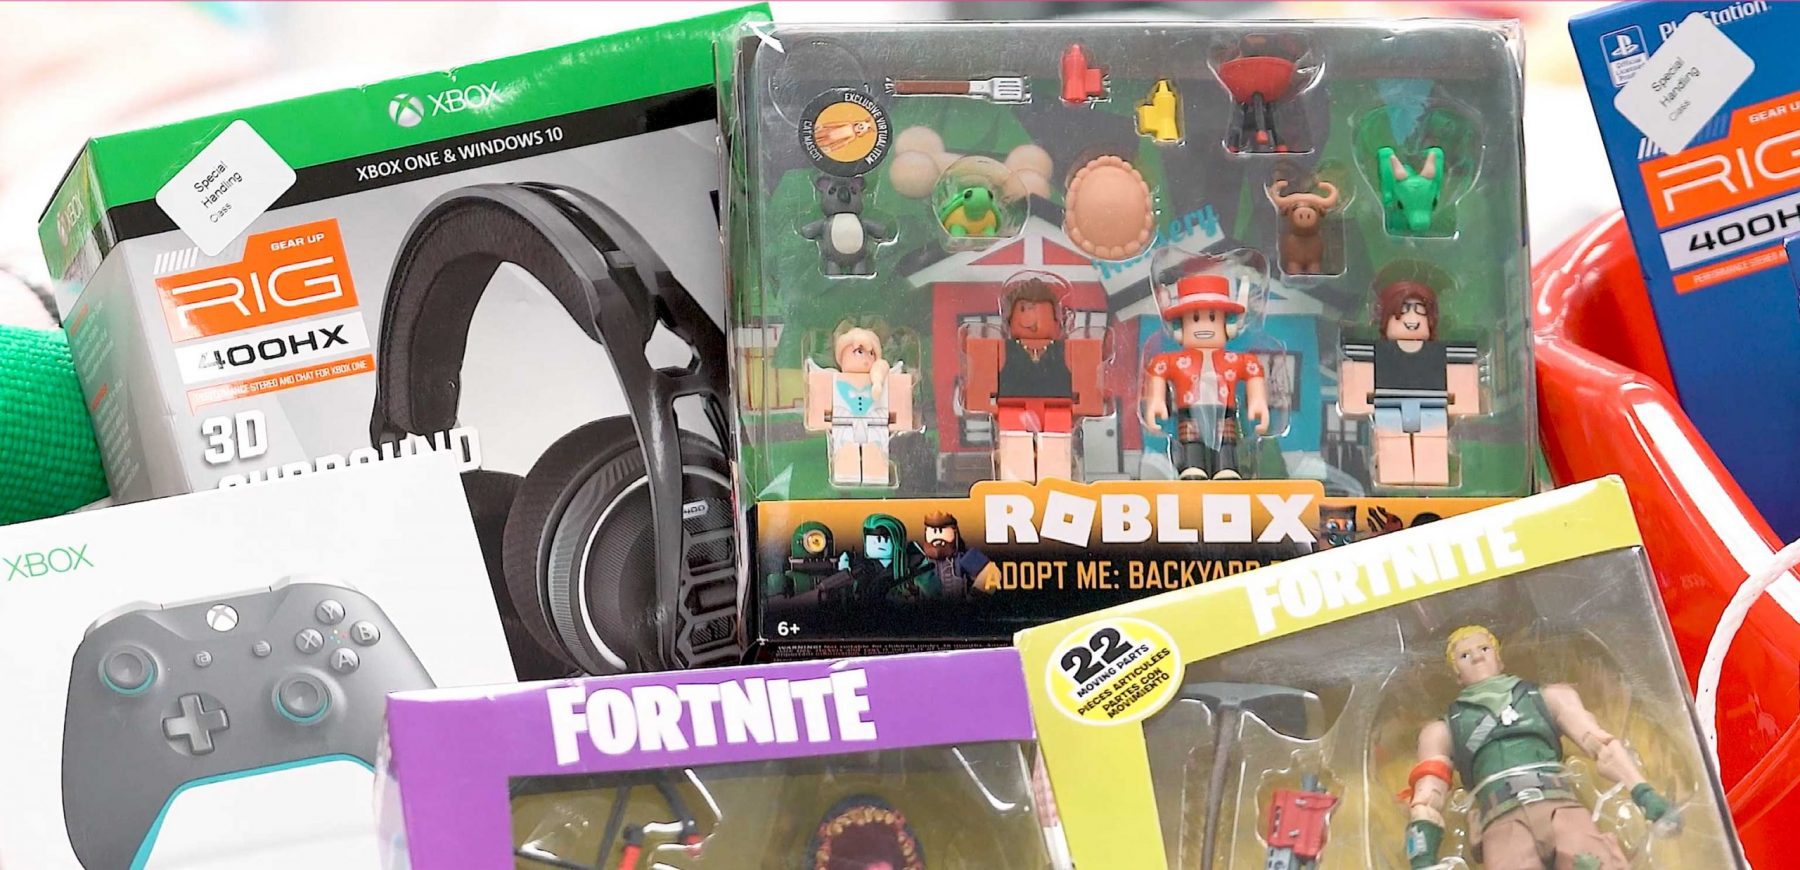 Krazy Bins Xbox Fortnite xbox remote, headphones, robolox dolls, and fortnite dolls box sitting in bin